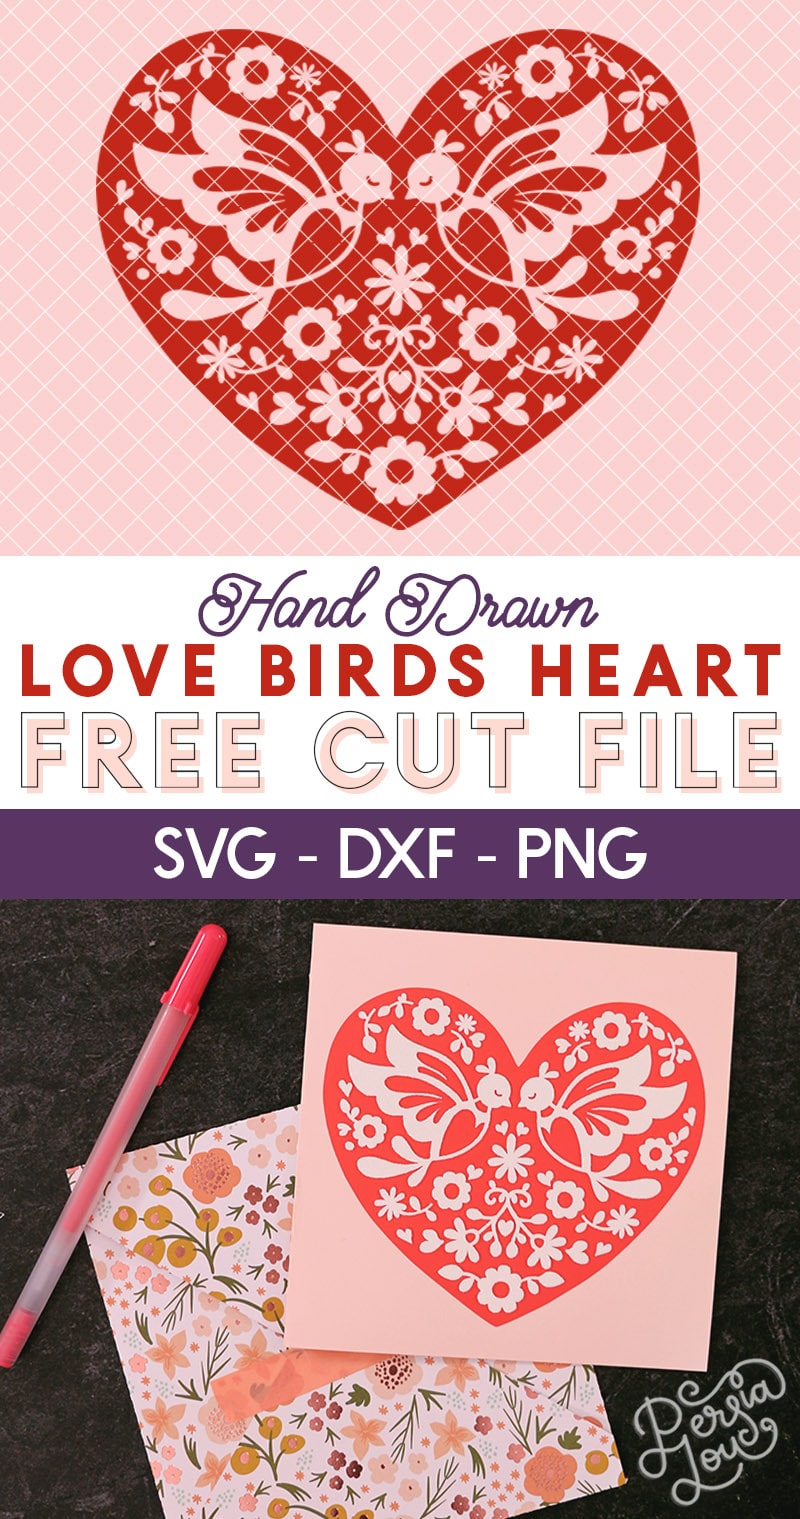 Download Free Love Birds Heart SVG Cut File - Persia Lou